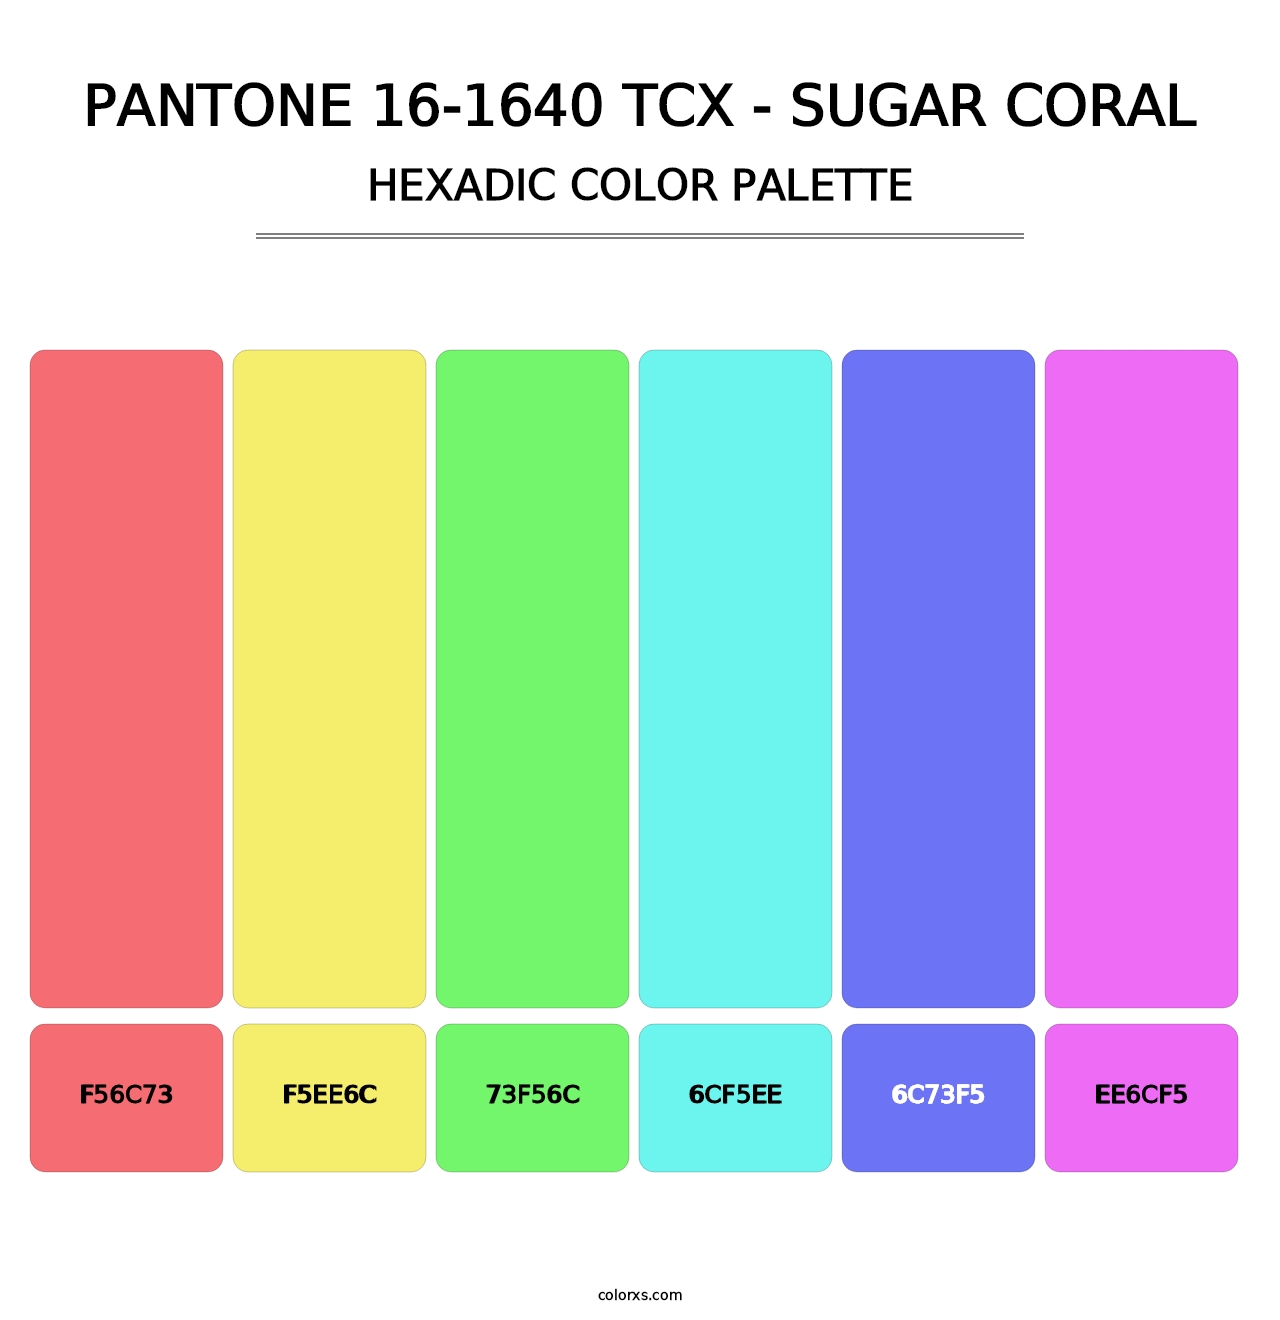 PANTONE 16-1640 TCX - Sugar Coral - Hexadic Color Palette